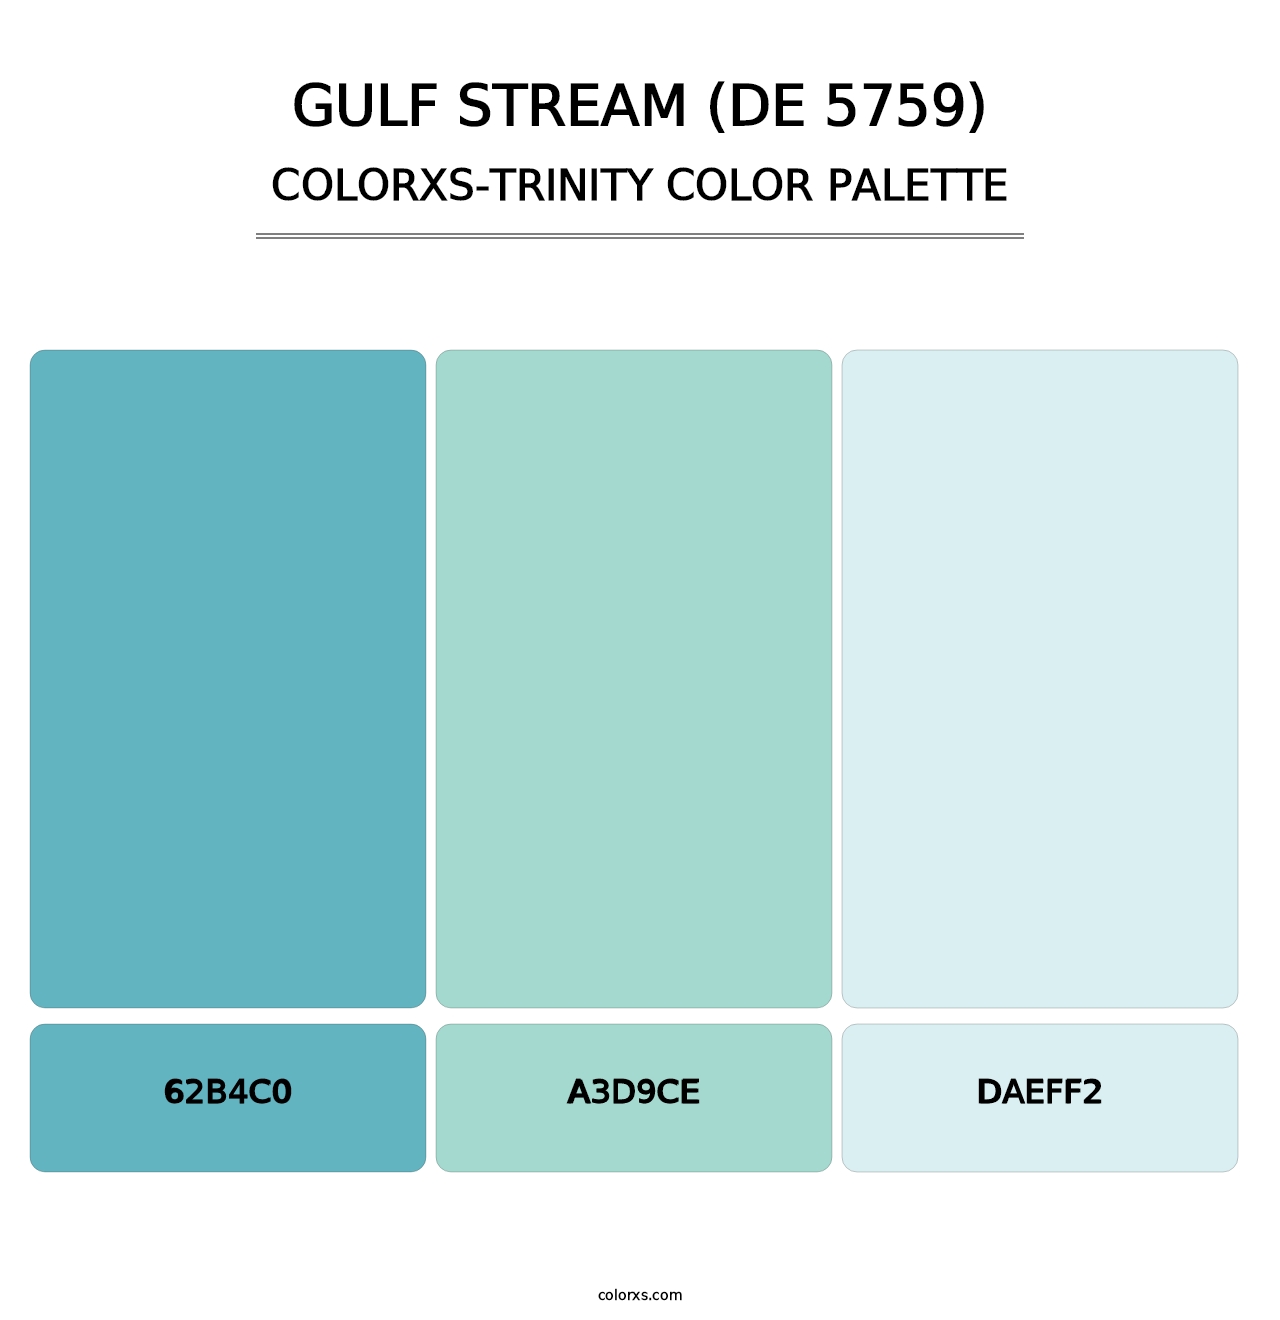 Gulf Stream (DE 5759) - Colorxs Trinity Palette